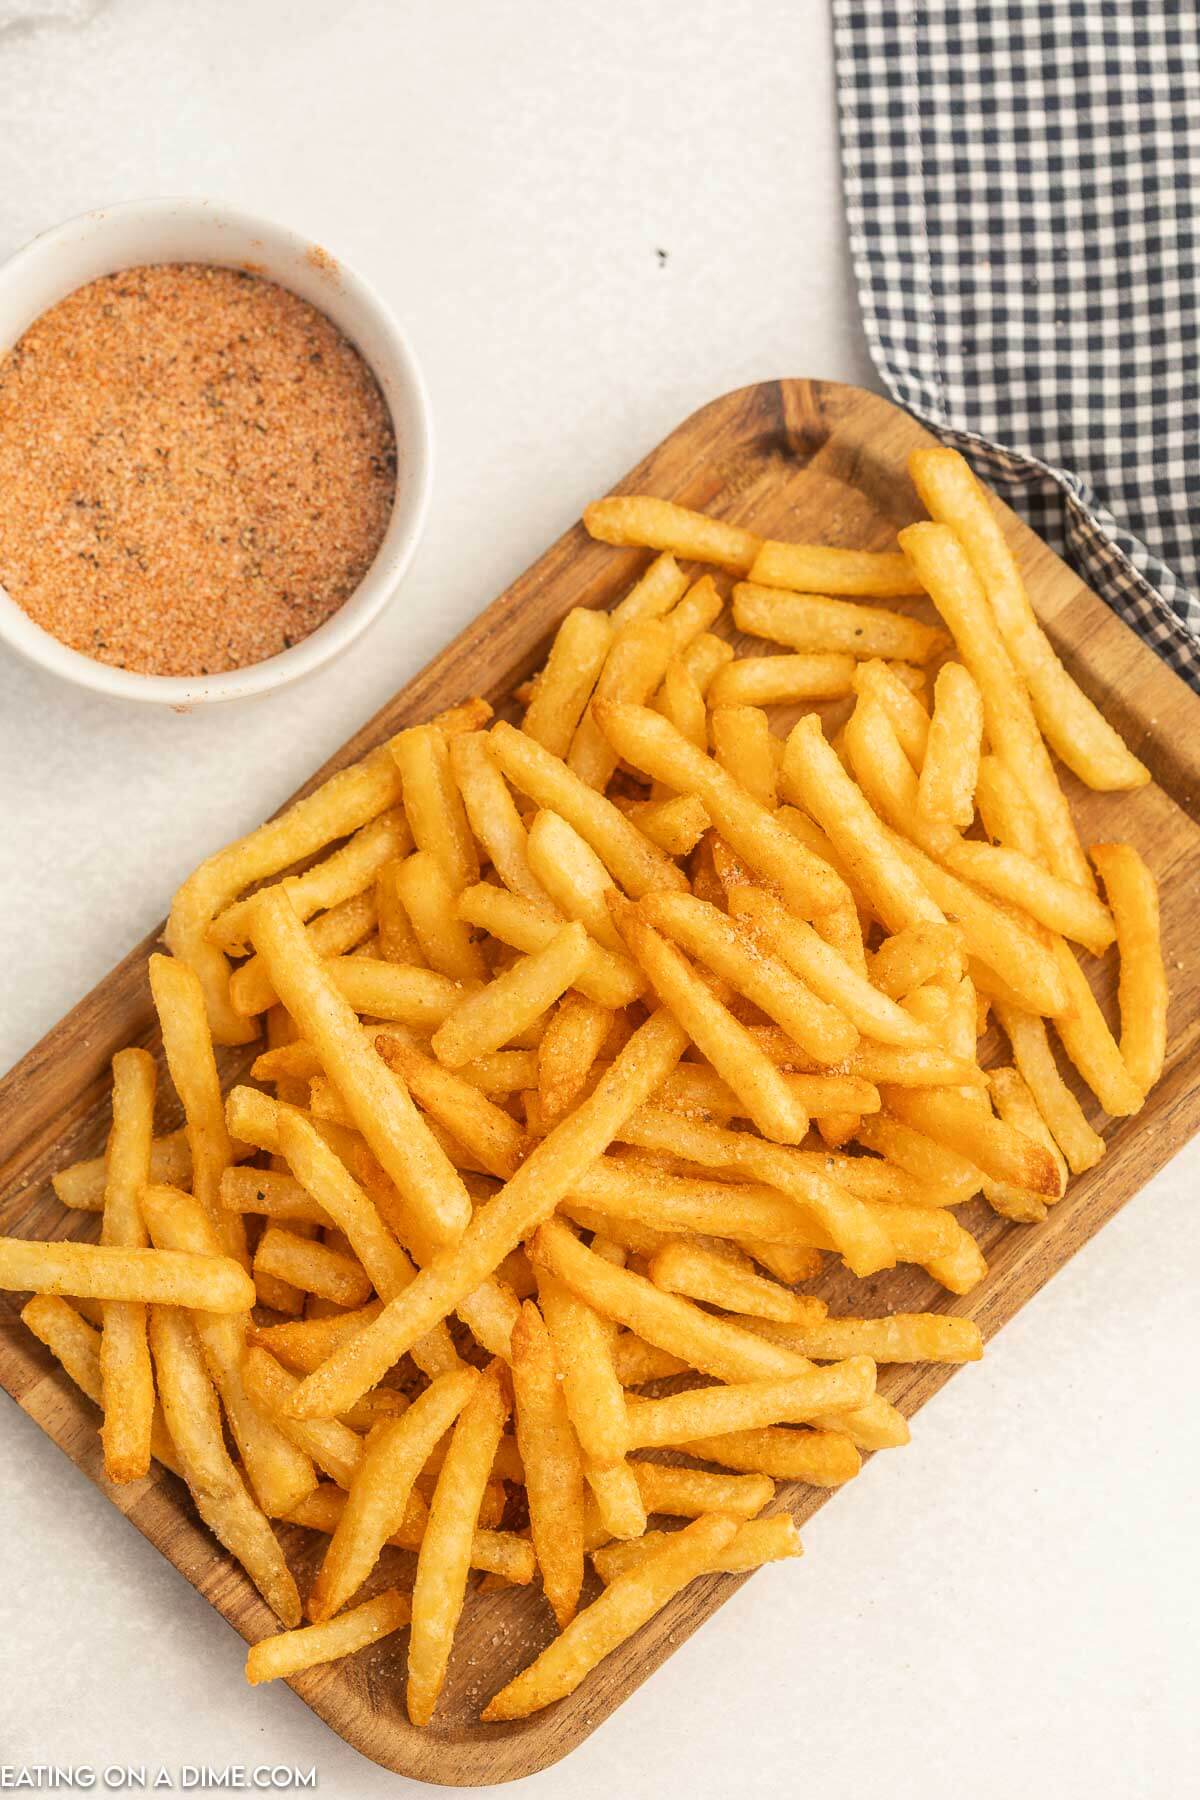 Best French Fry Seasoning (Homemade)